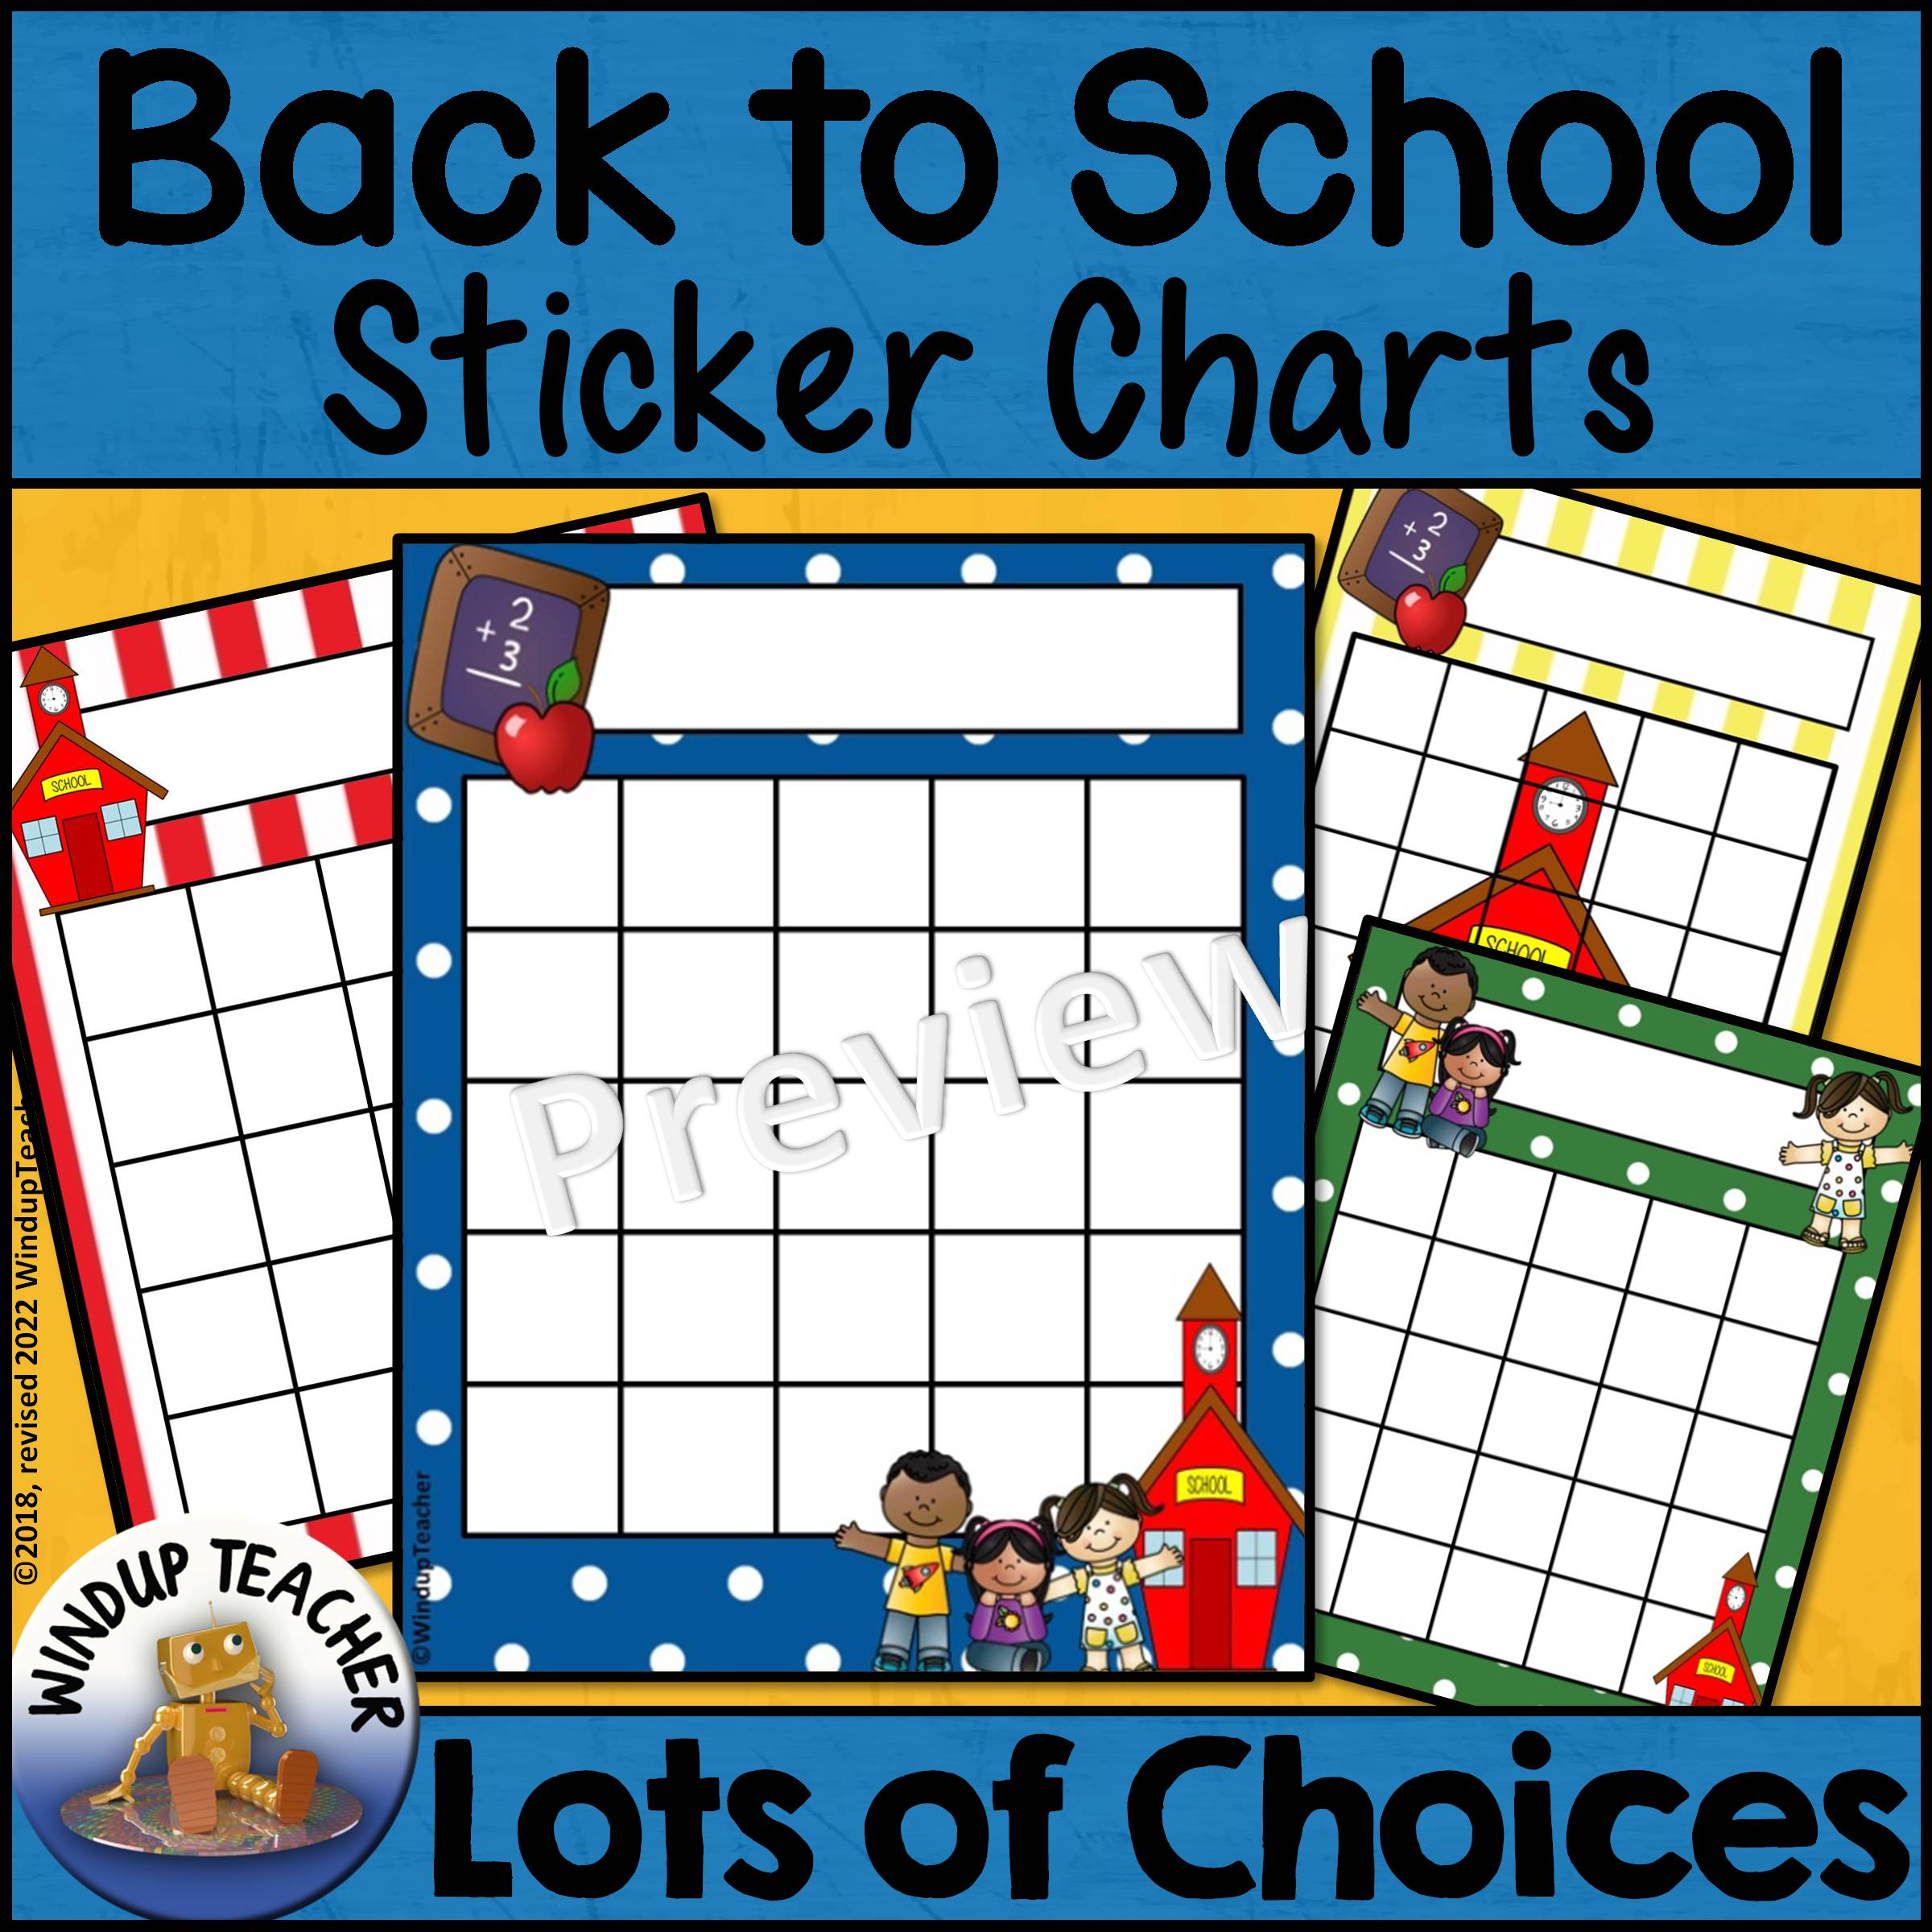 Back to School Sticker Charts